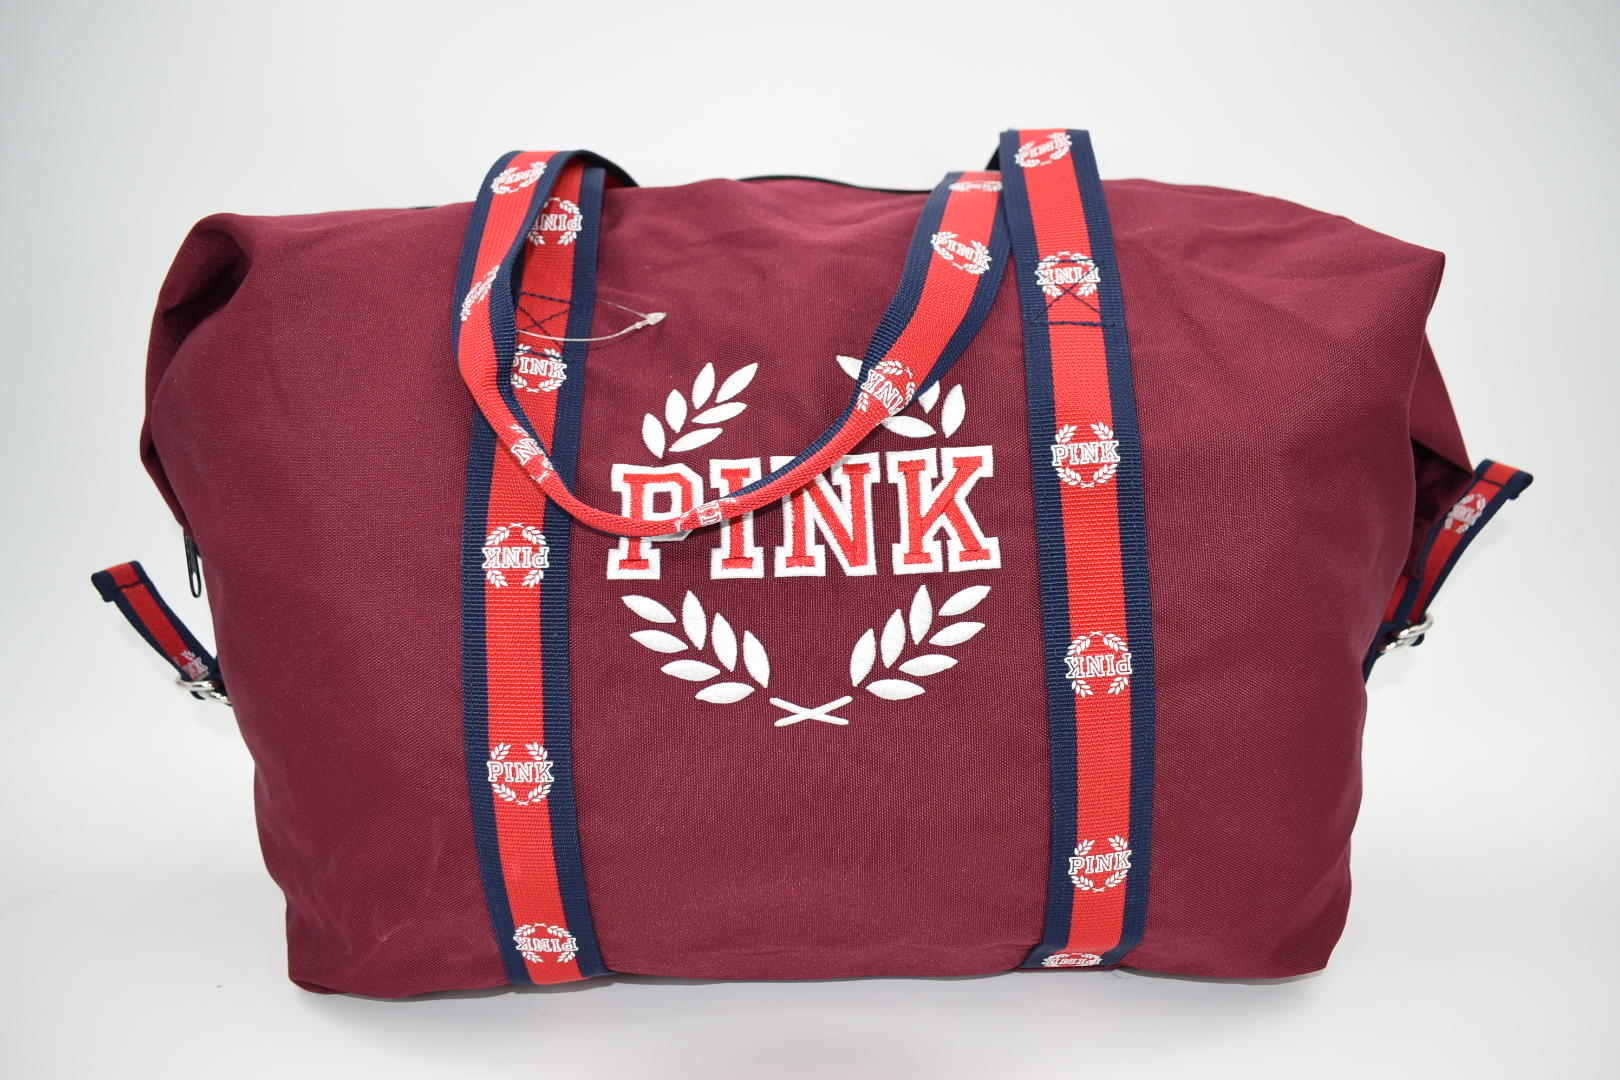 Victoria's Secret PINK Duffle Gym Bag in Burgundy – Pink Lemon Standard